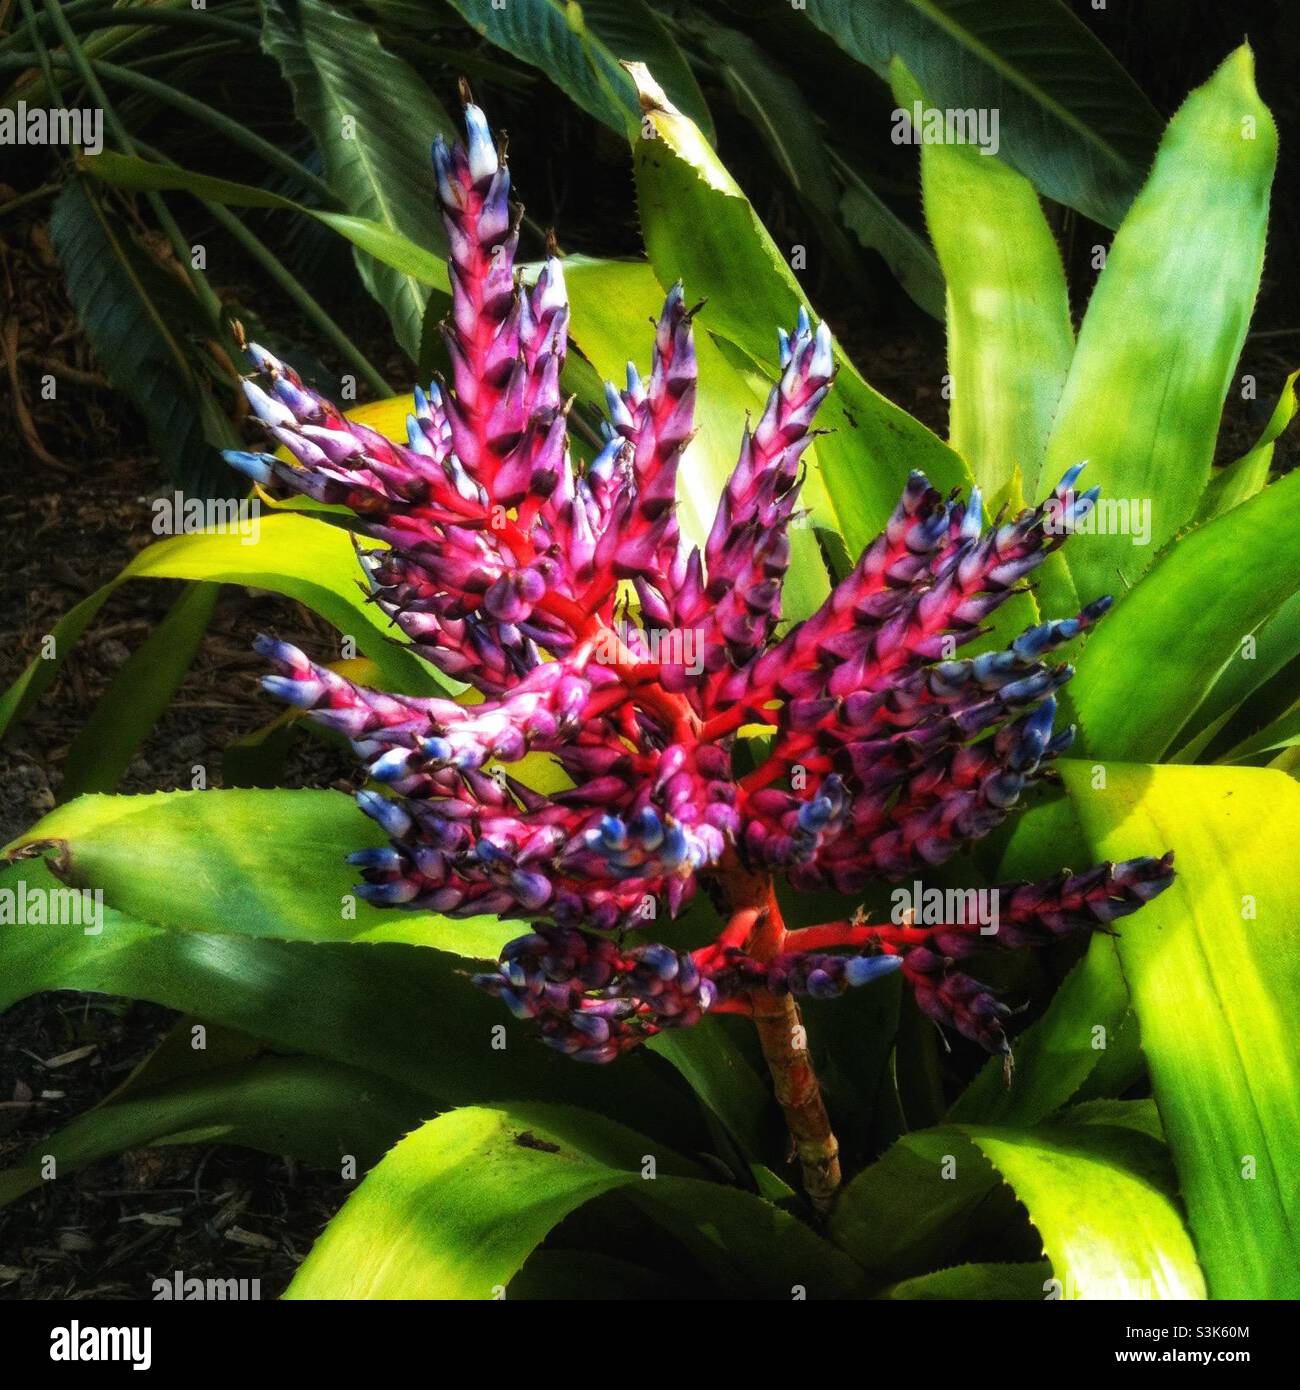 Marie Selby Botanical Gardens in Sarasota Florida Stockfotografie - Alamy